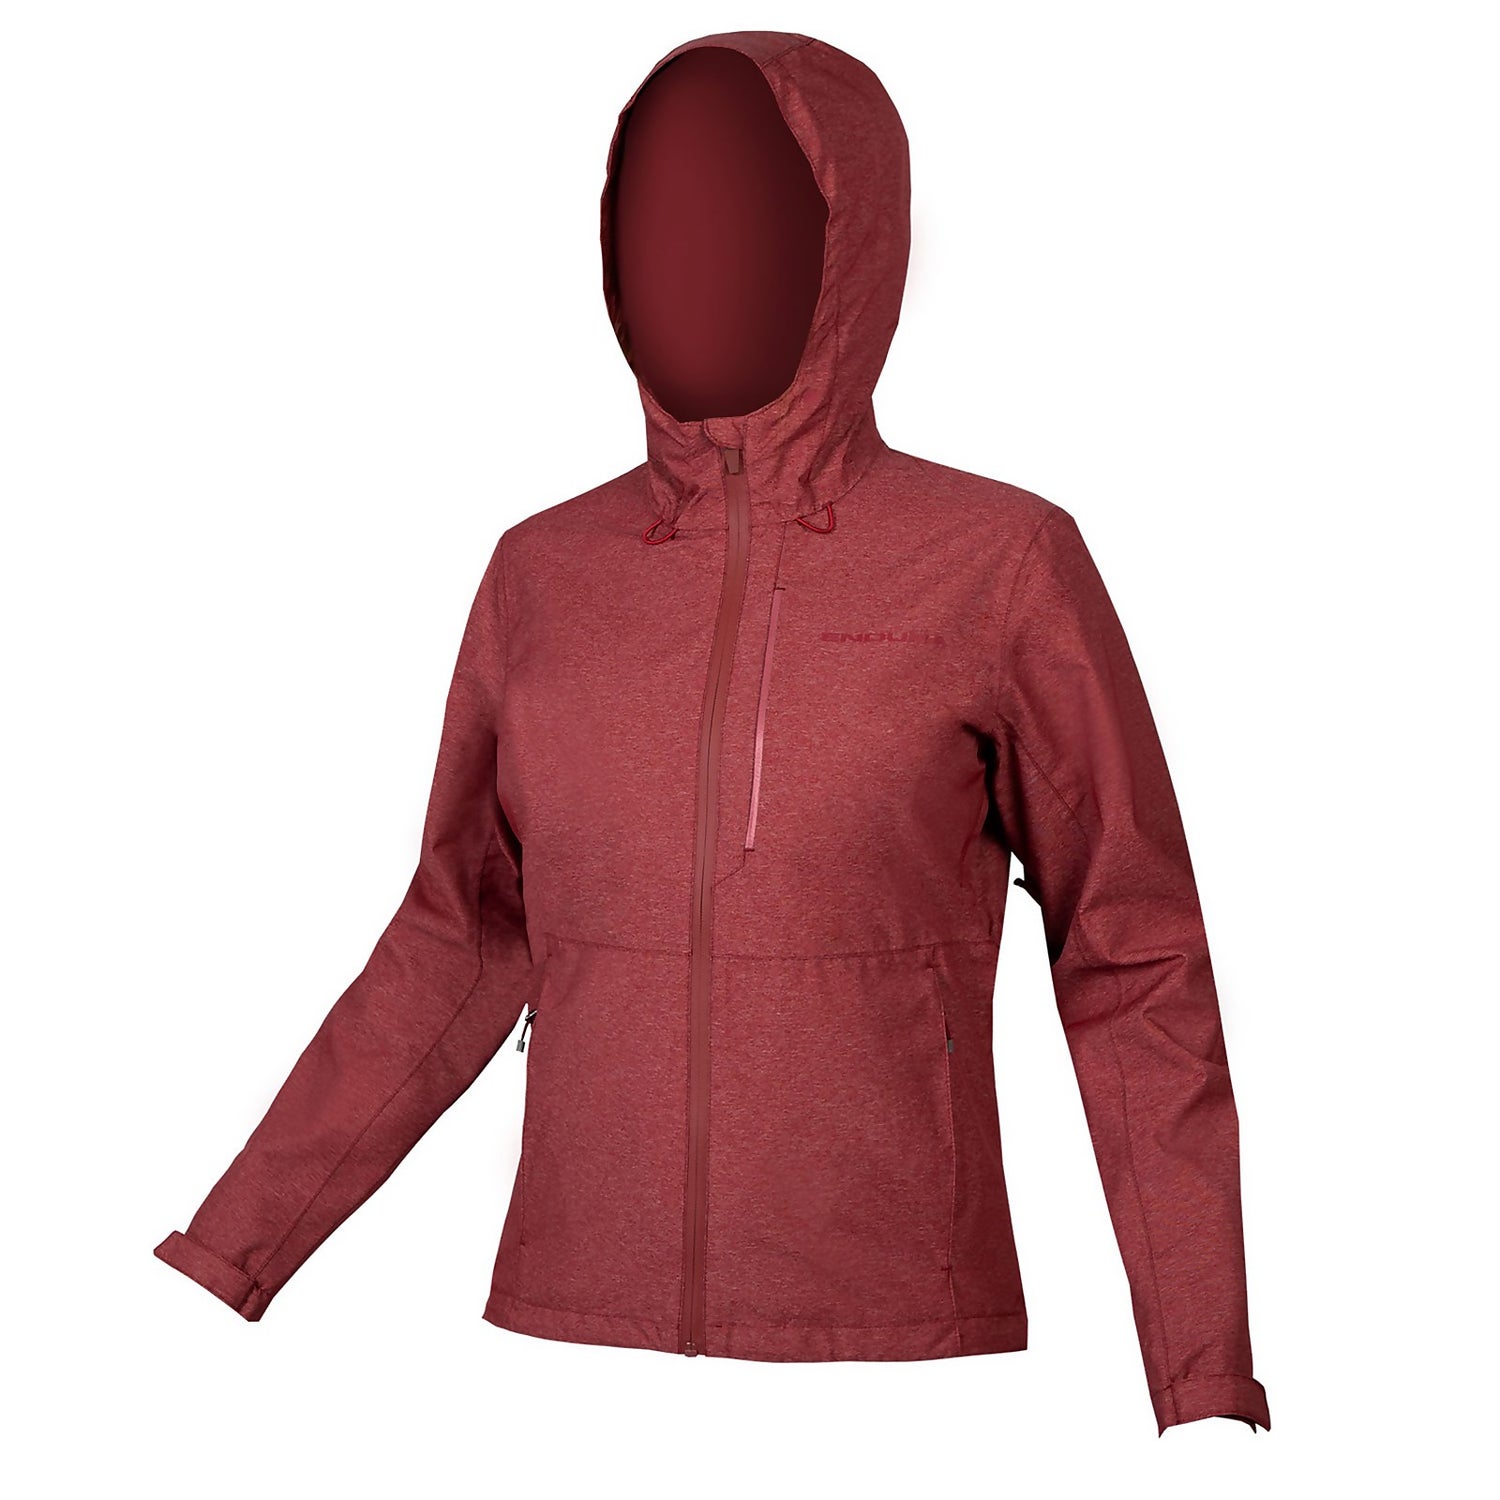 Womens Hummvee Waterproof Hooded Jacket - Cocoa - L